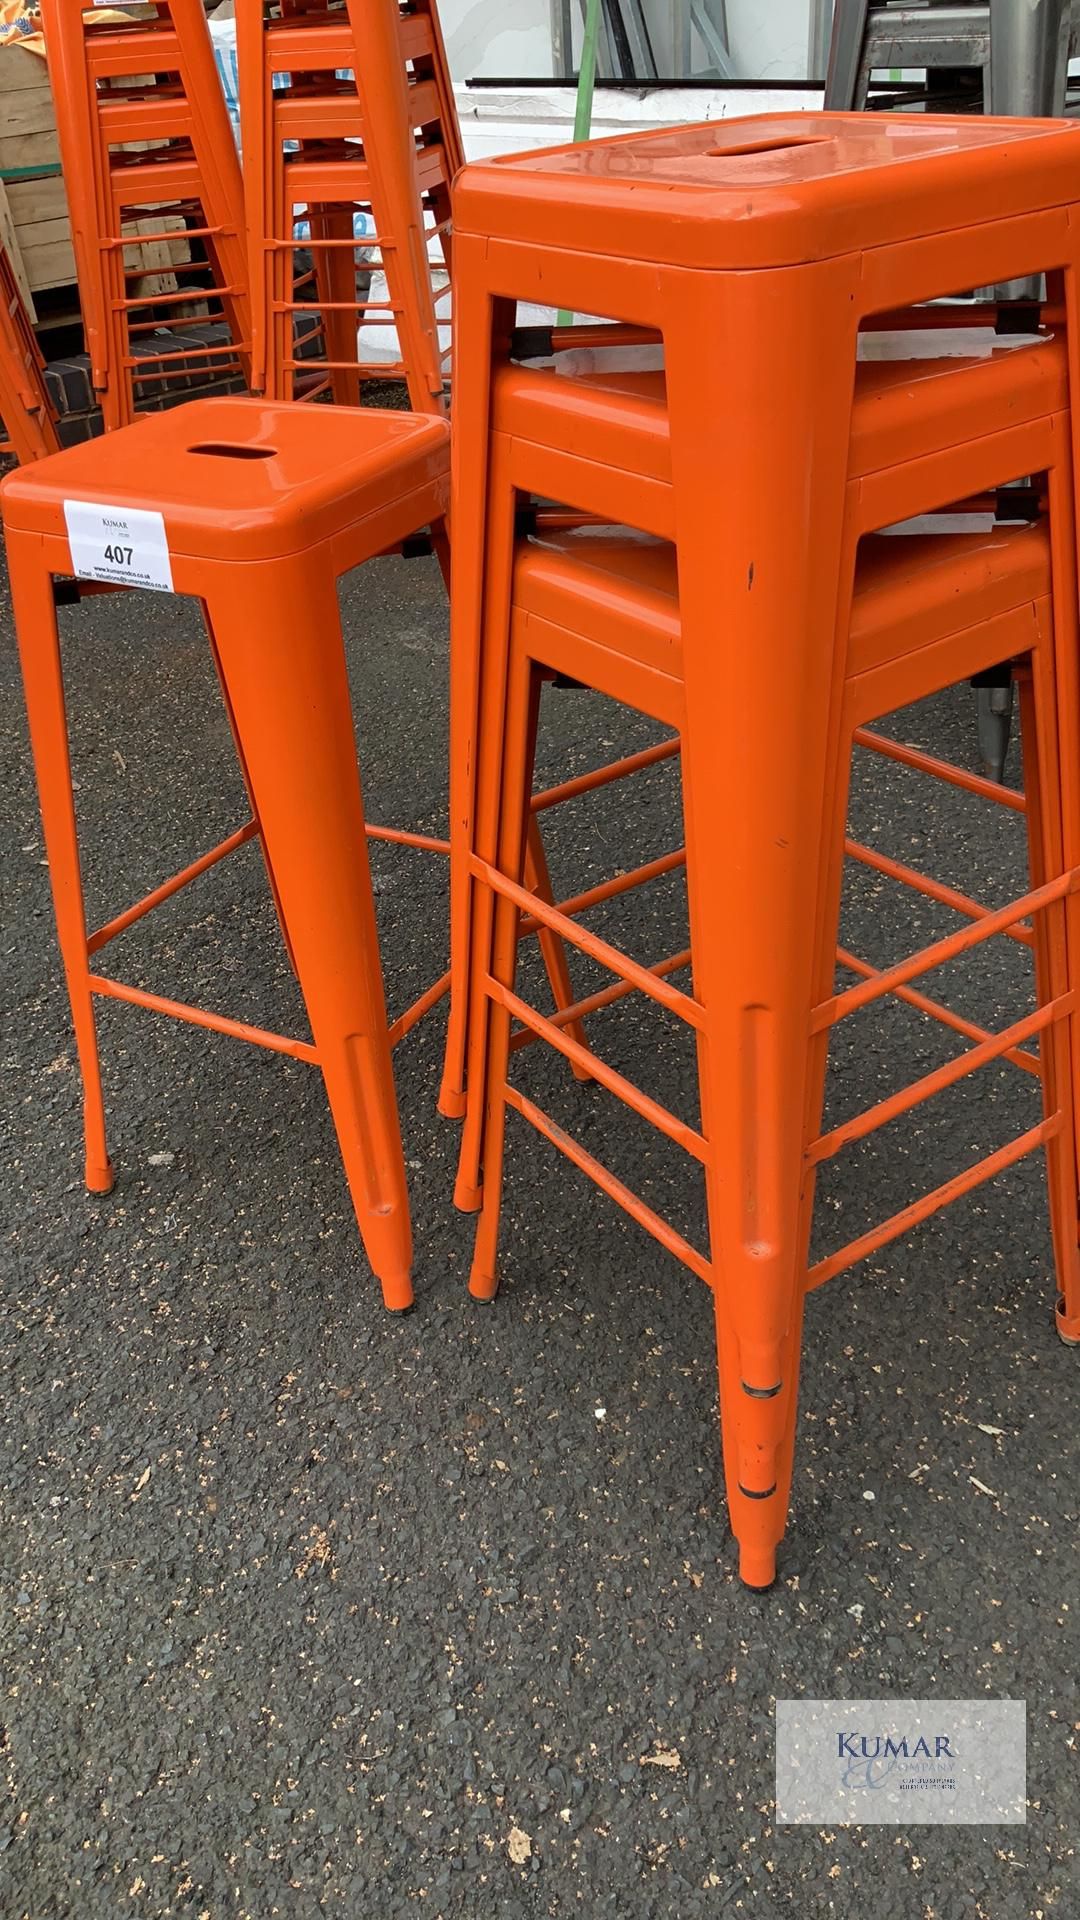 Set of 4 Callie backless metal bar stools in orange 765mm high - Image 3 of 3